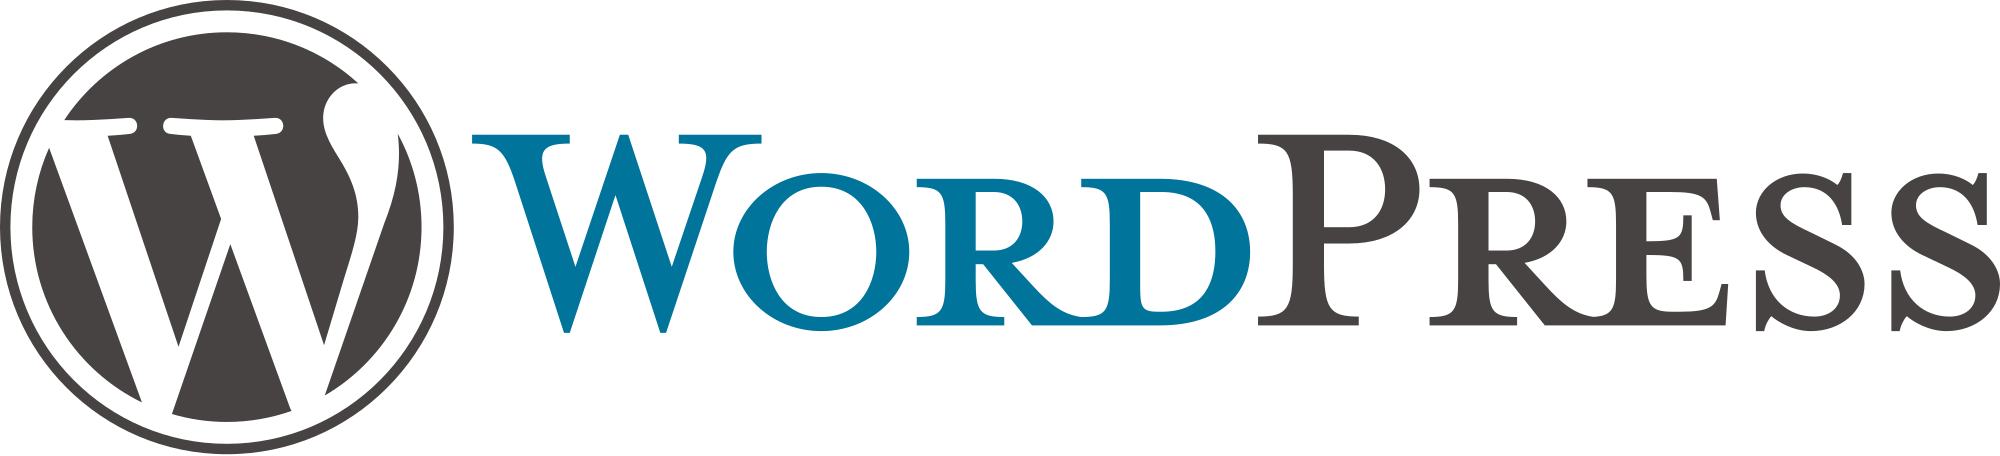 The WordPress Logo 